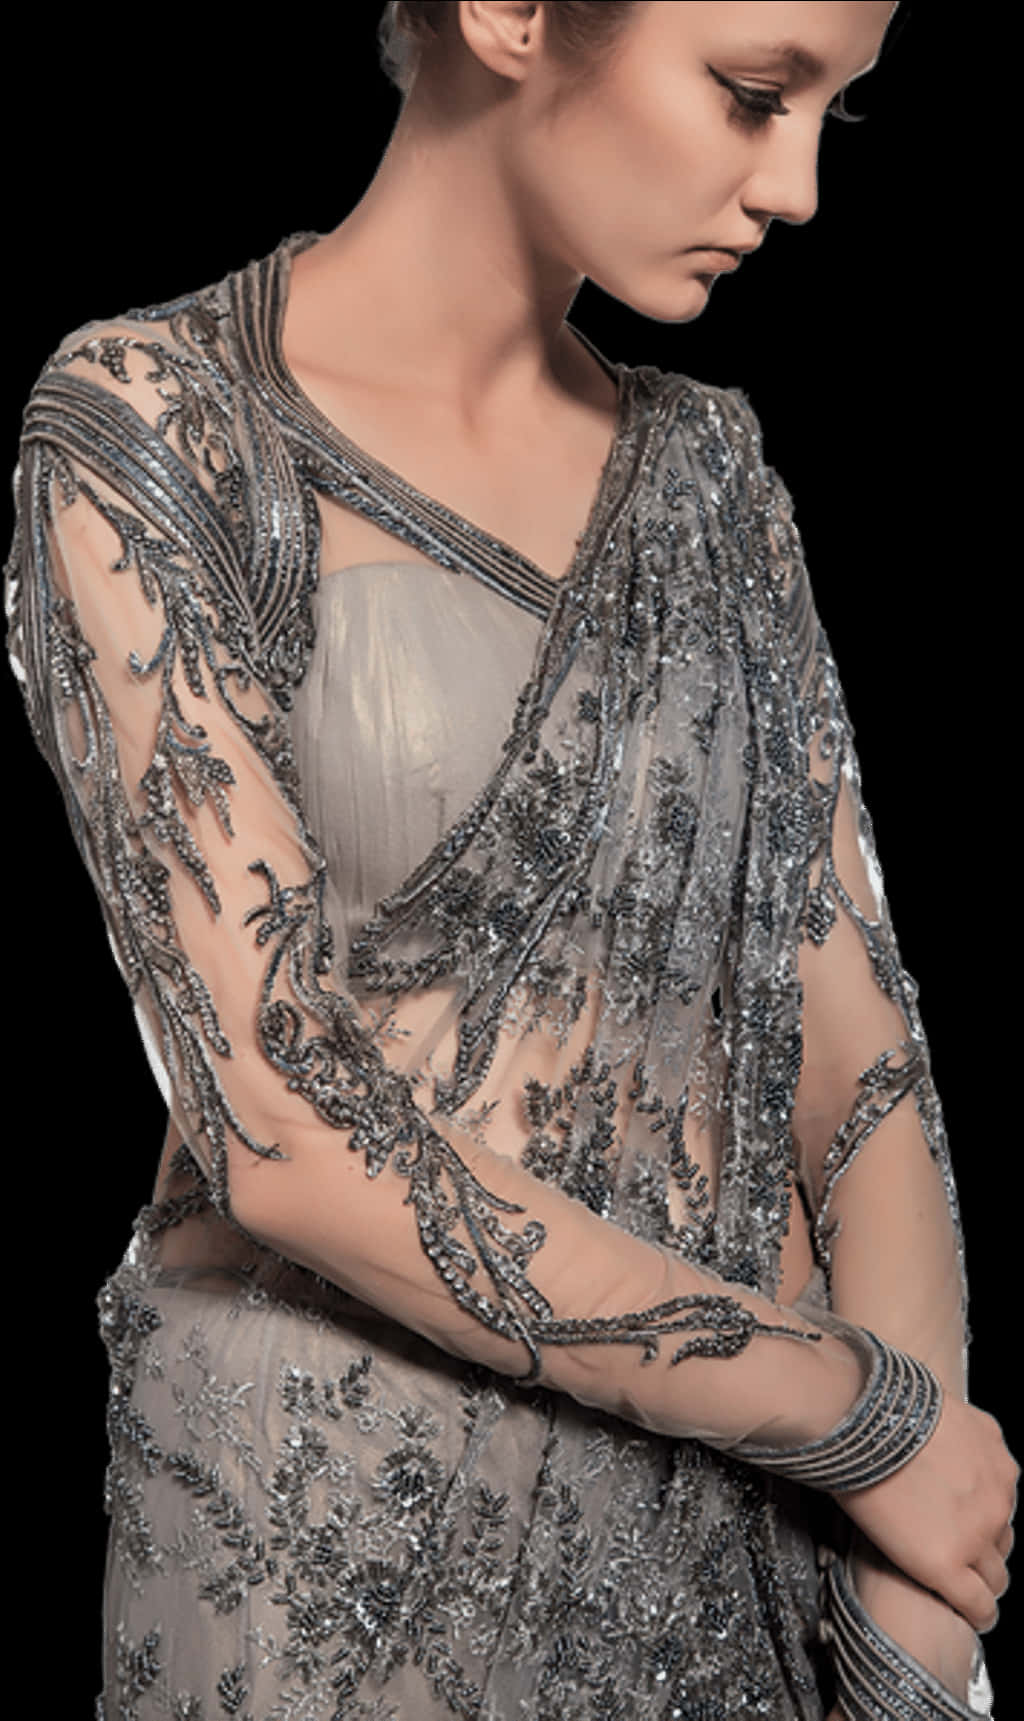 A Woman Wearing A Silver Dress